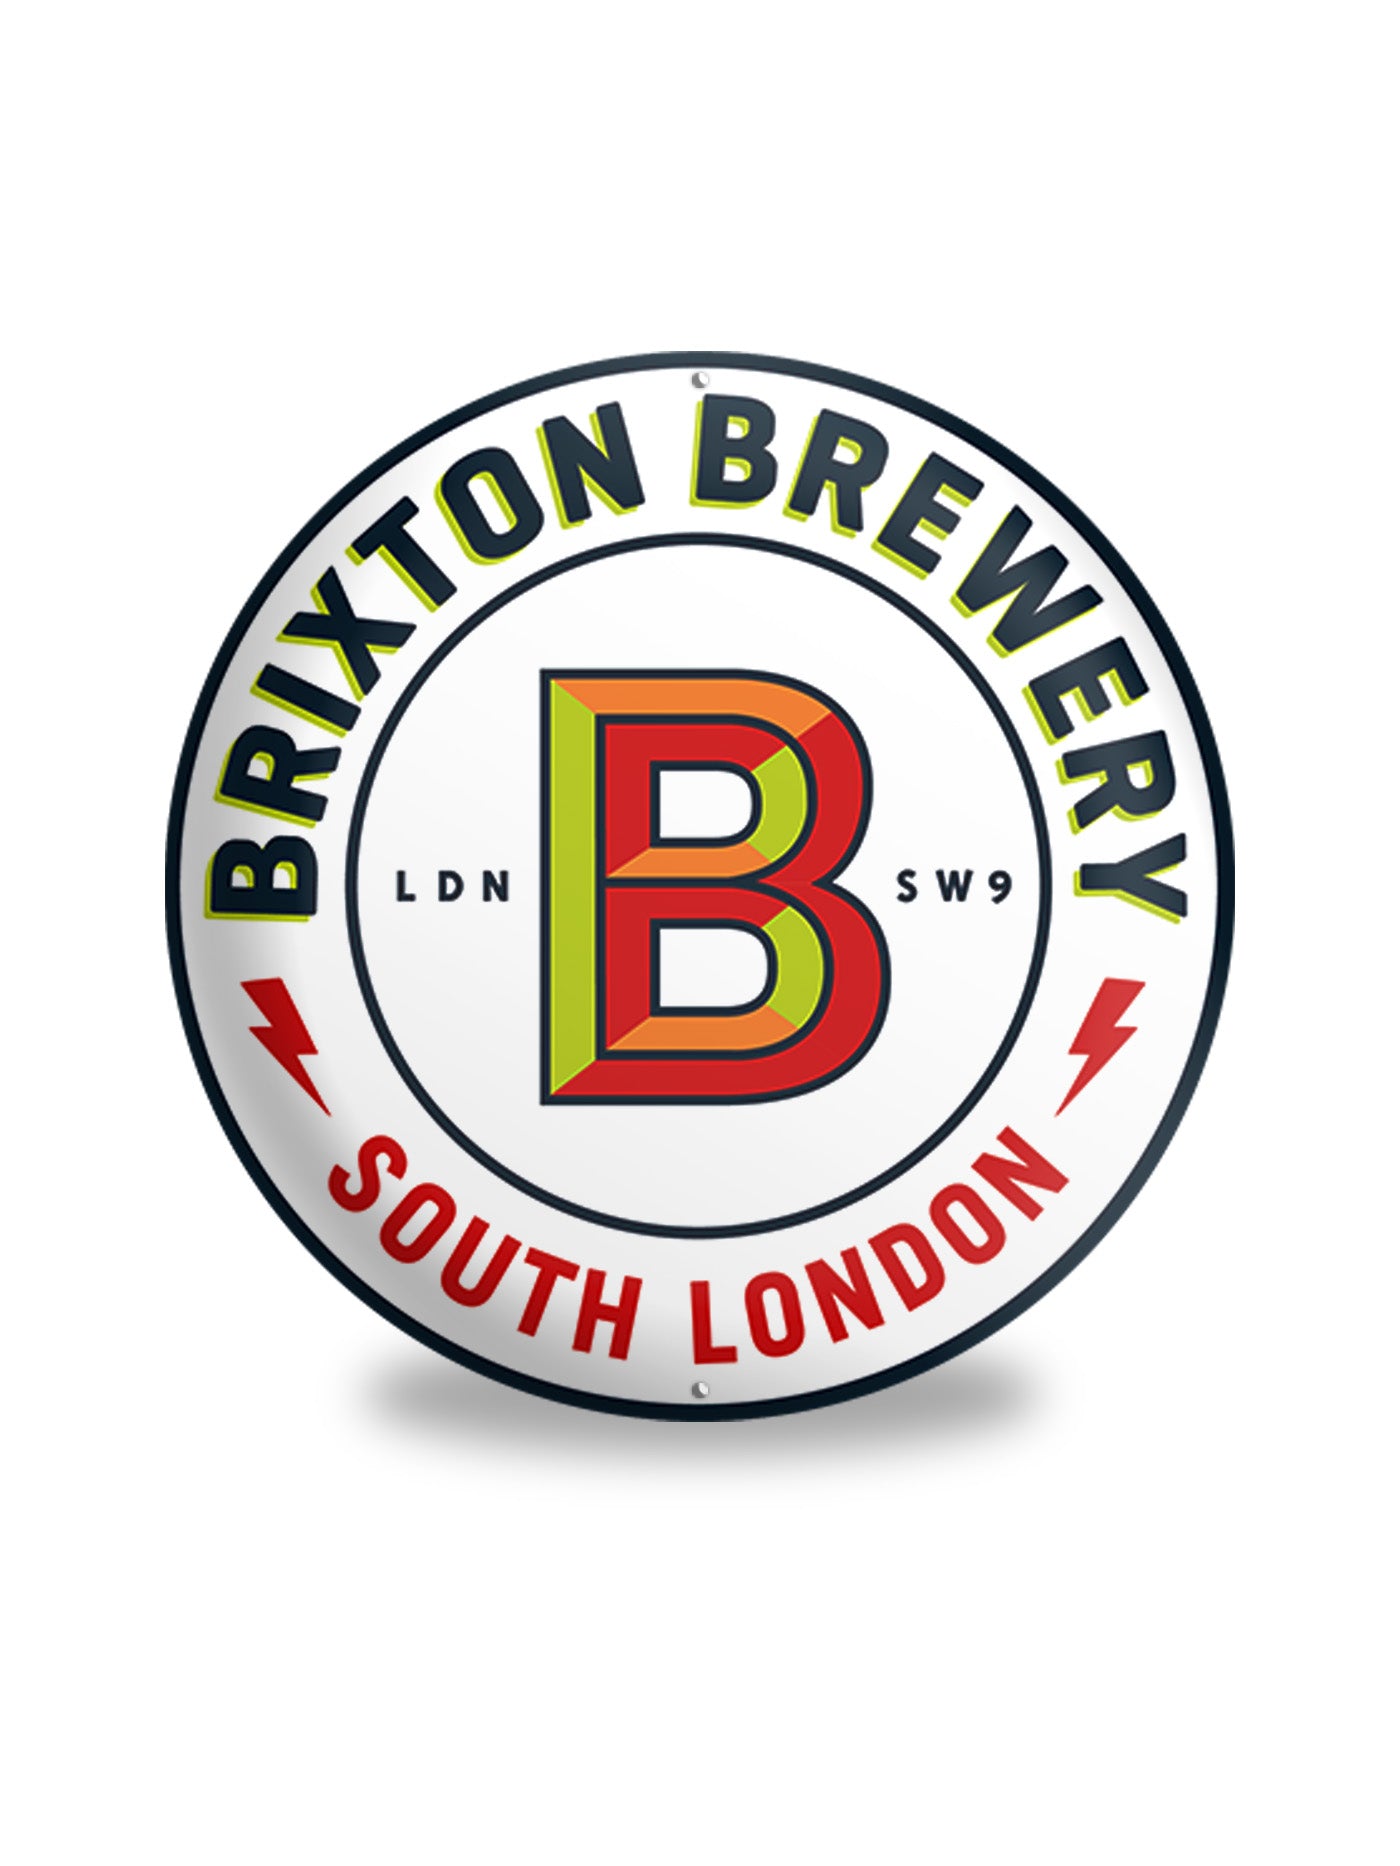 Brixton Brewery Metal Sign